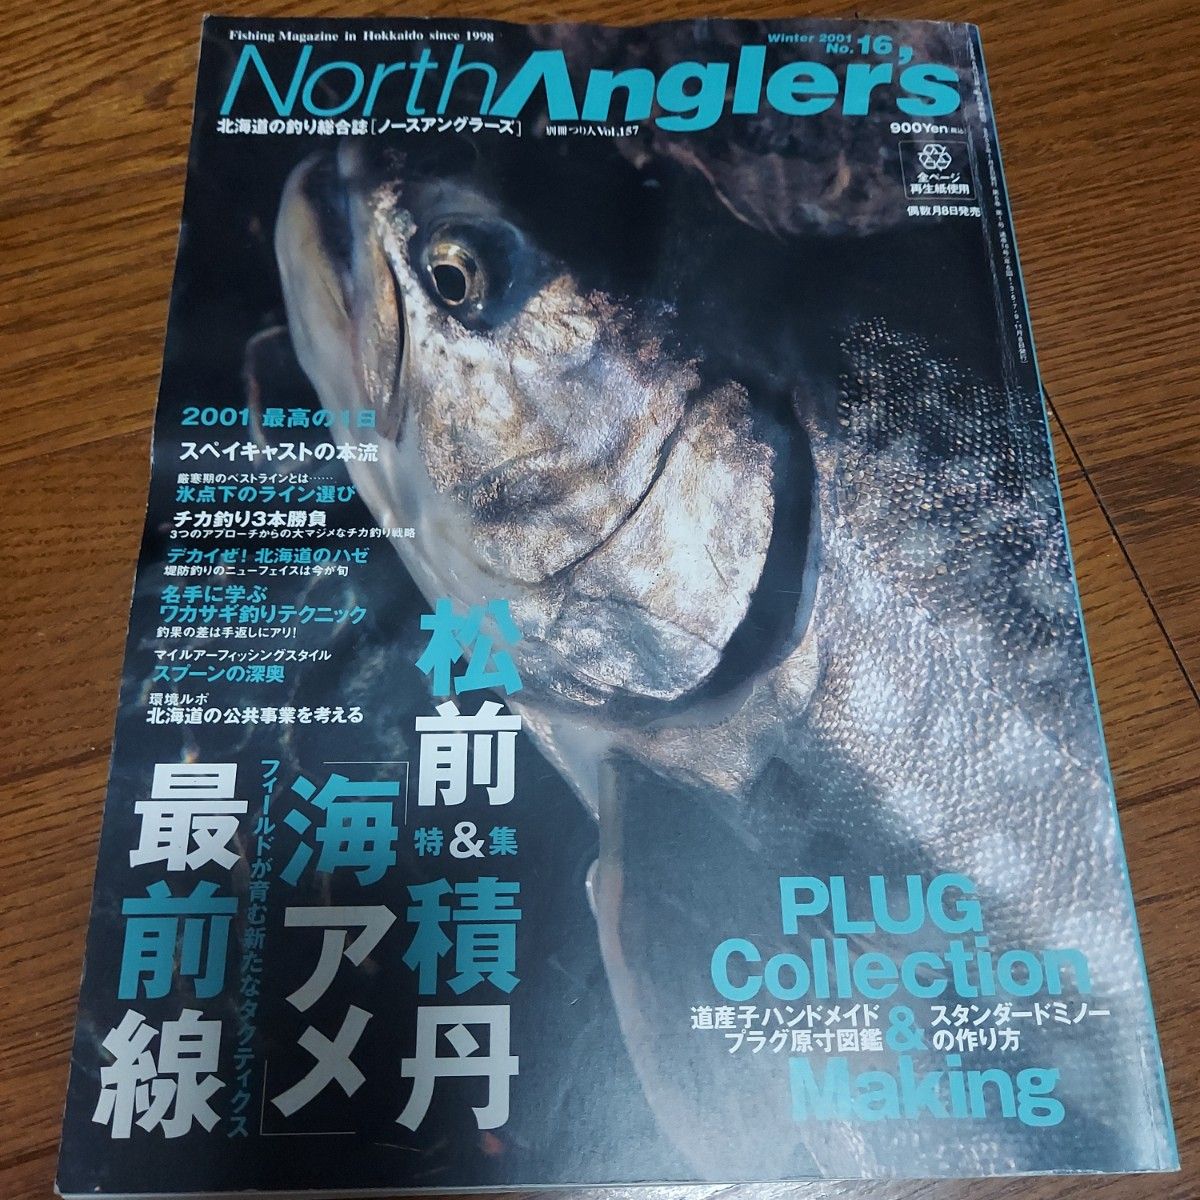 North Angler's ノースアングラーズ  Early Summer 16